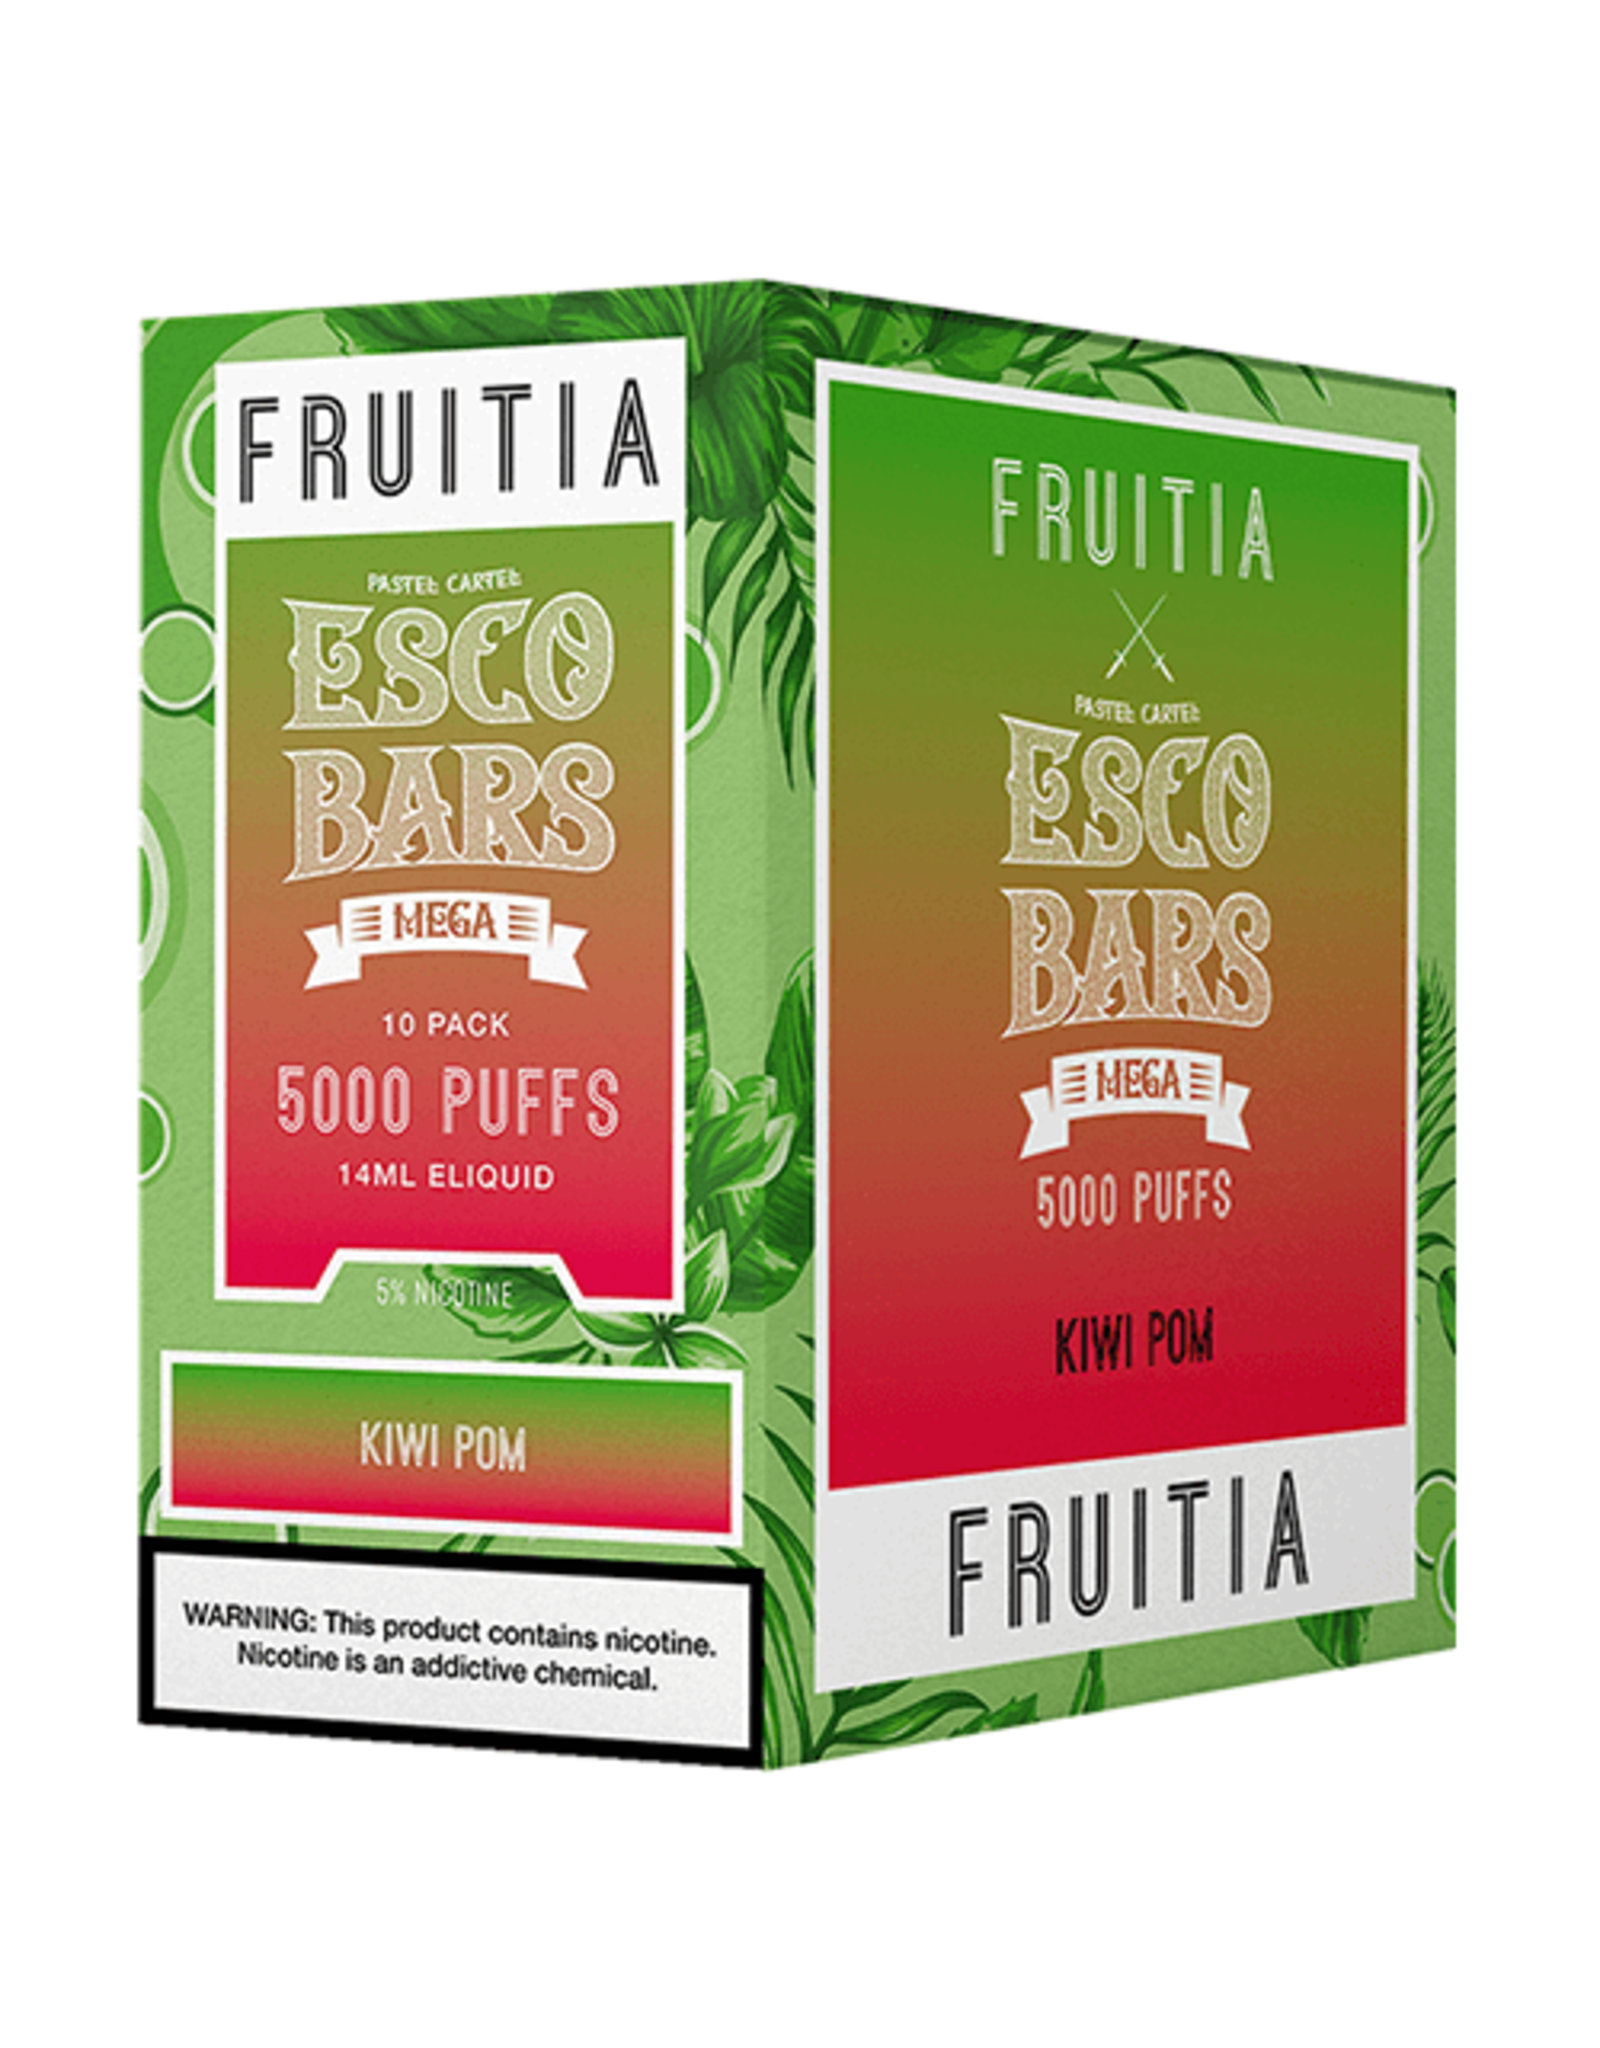 ESCO bars Esco Bar Mega Fruitia Kiwi Pom 5000 Puffs Rechargeable box